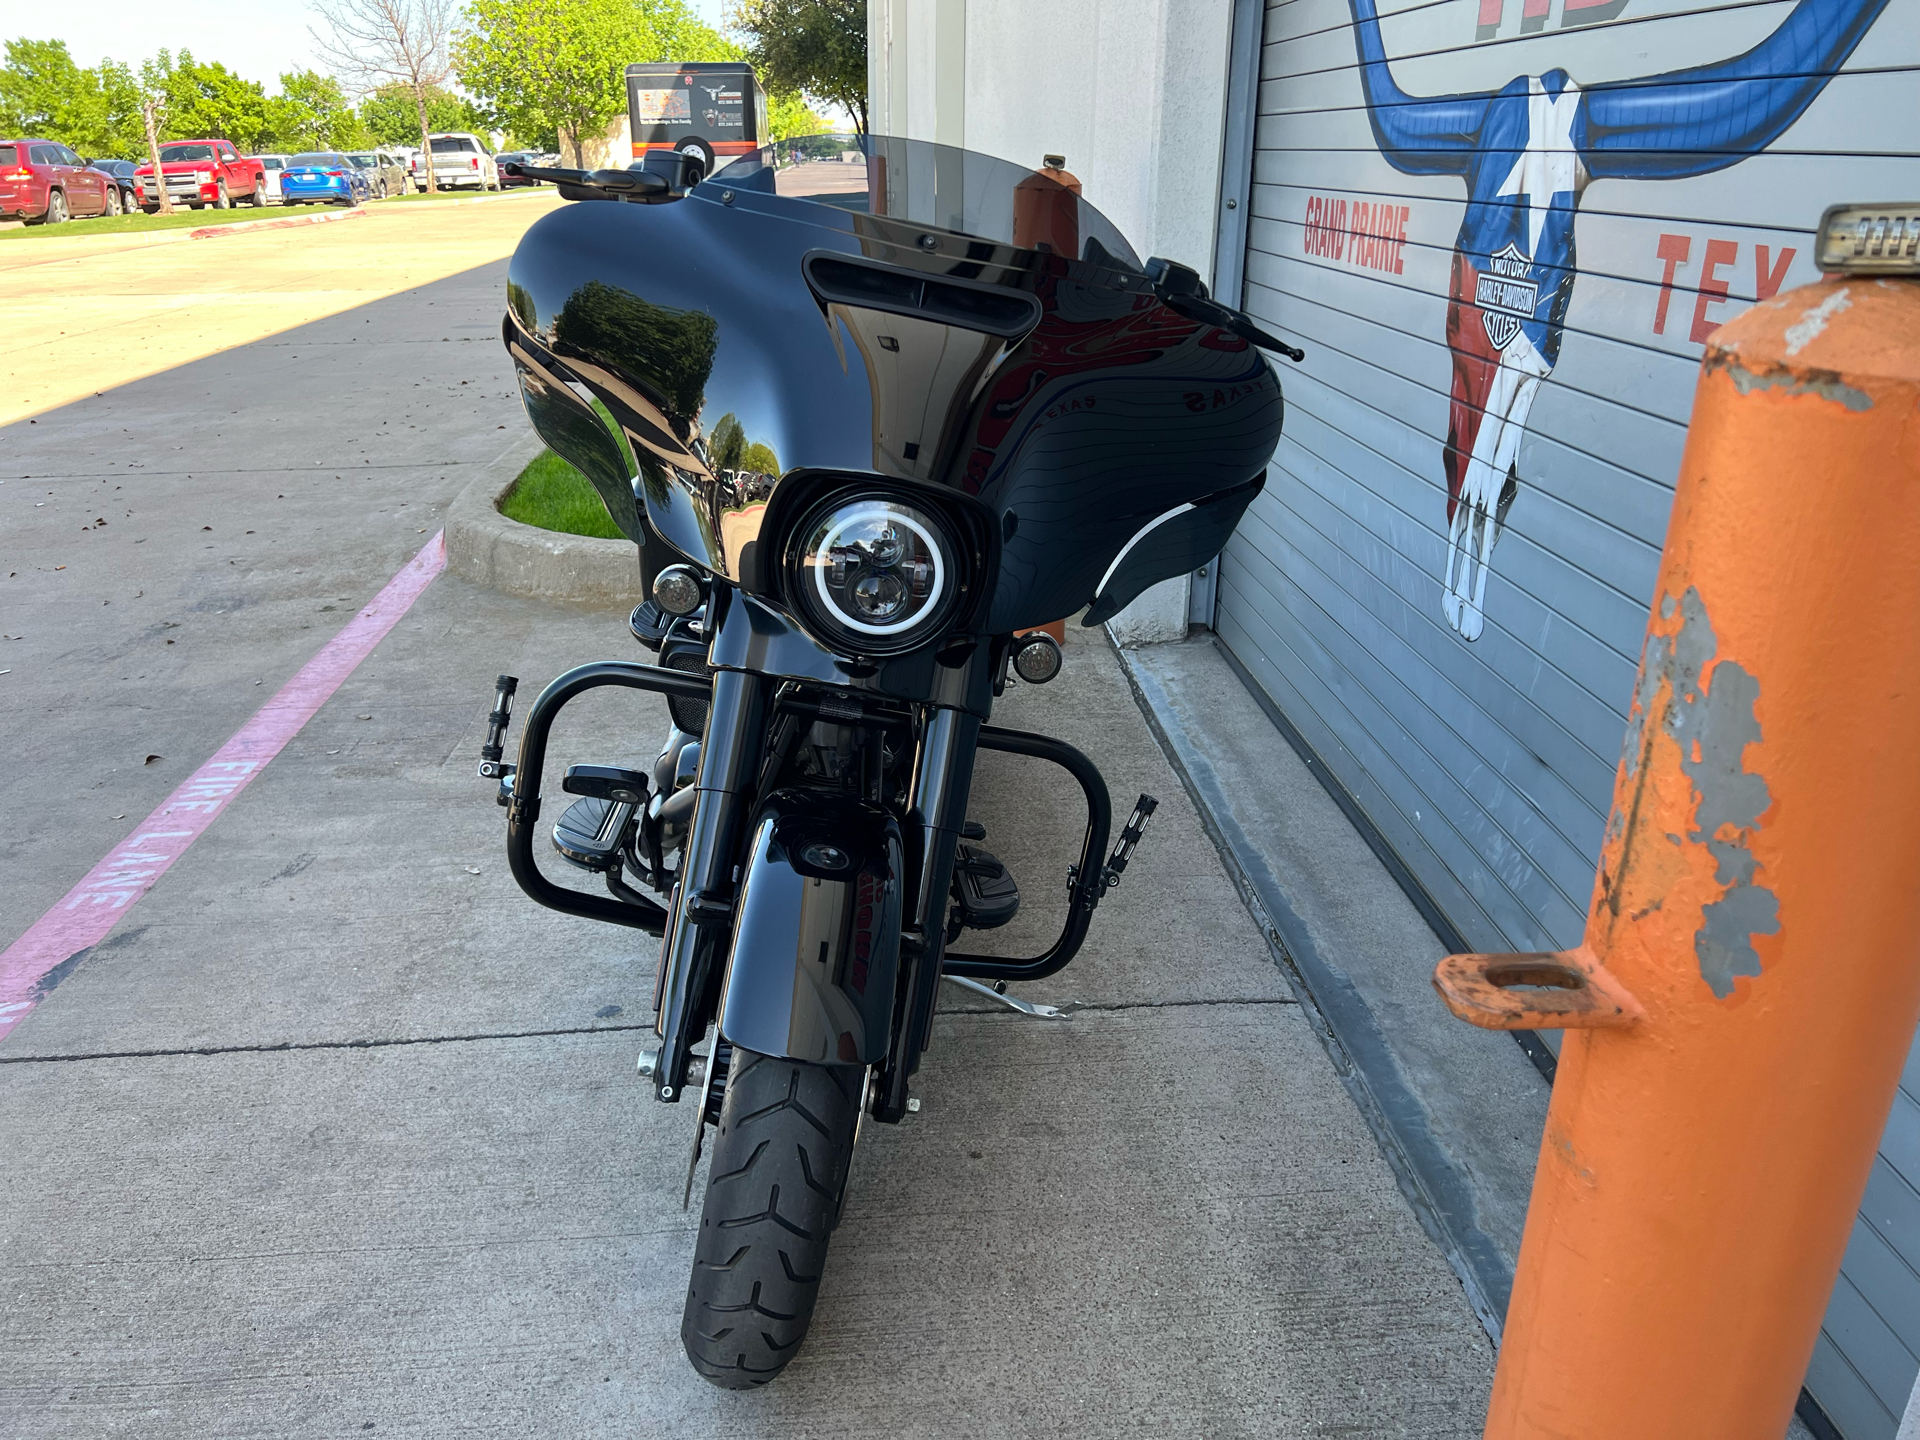 2019 Harley-Davidson Street Glide® Special in Grand Prairie, Texas - Photo 4